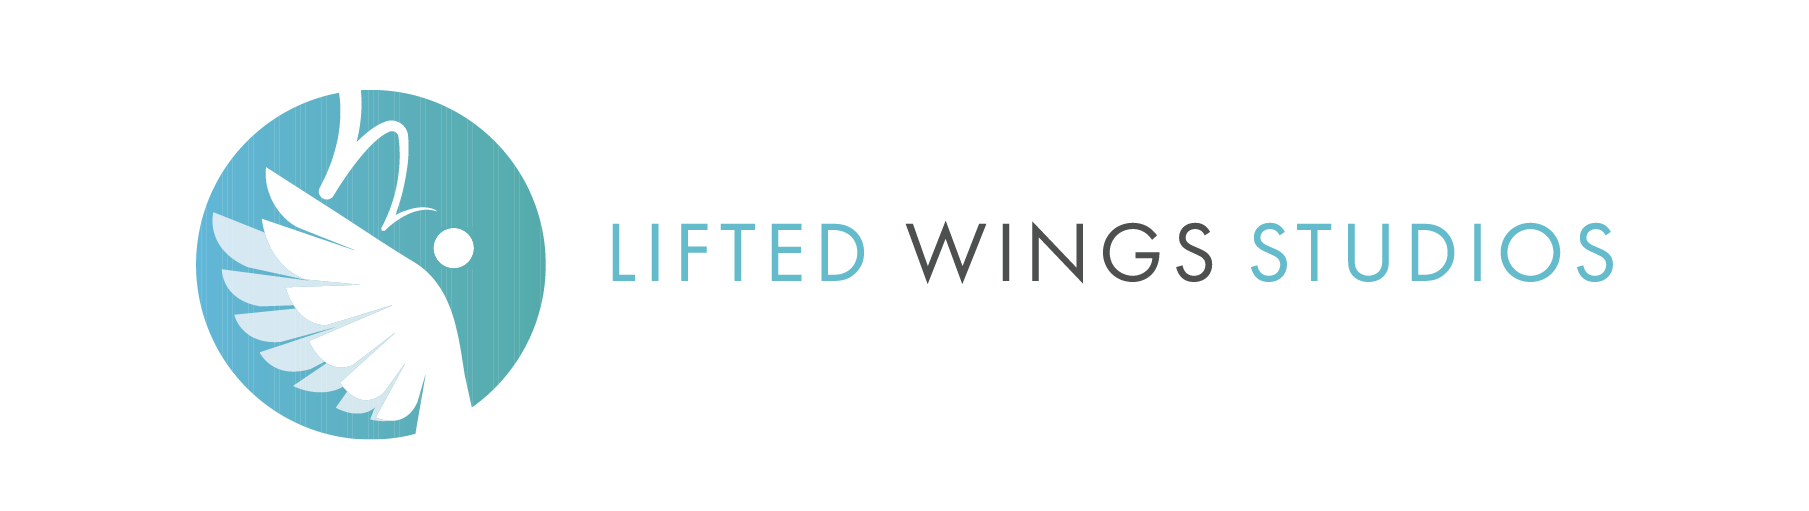 Lifted-Wings-Studios-vertical_logo